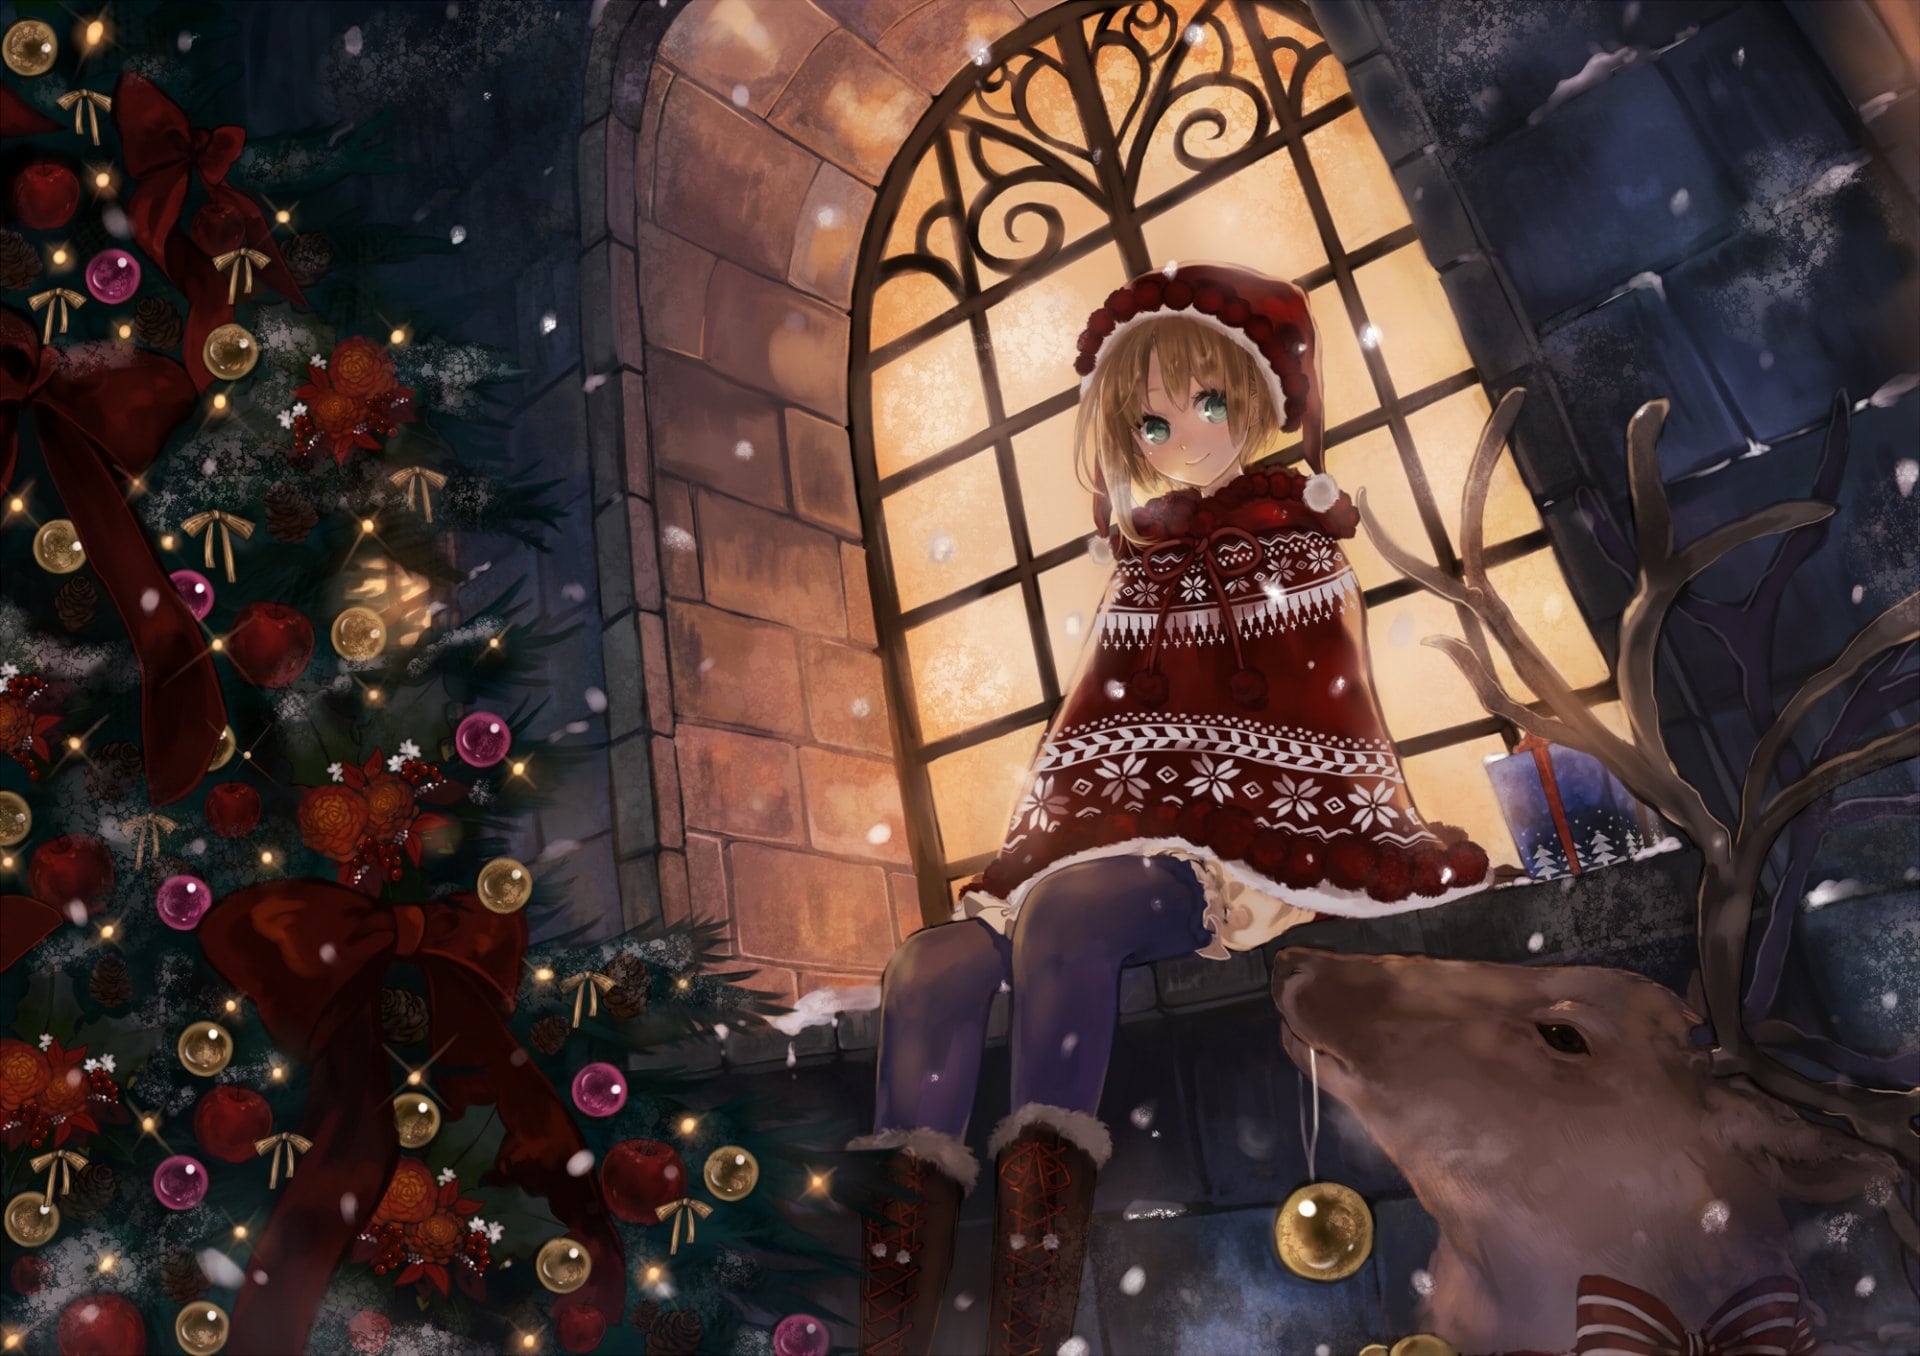 ArtStation - Christmas family time anime style